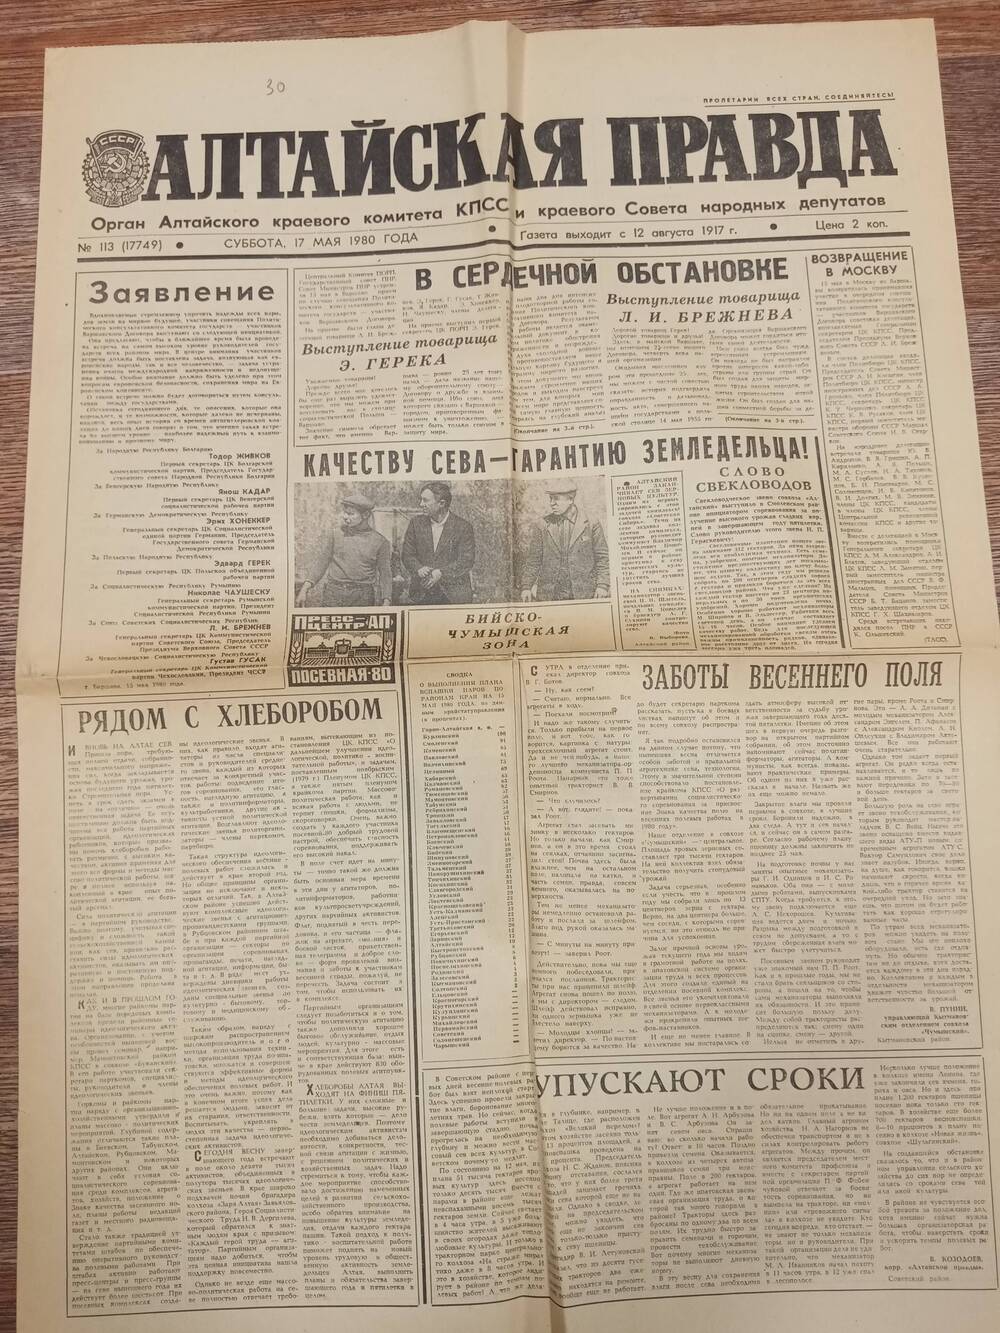 Газета Алтайская правда от 17 мая 1980 года.